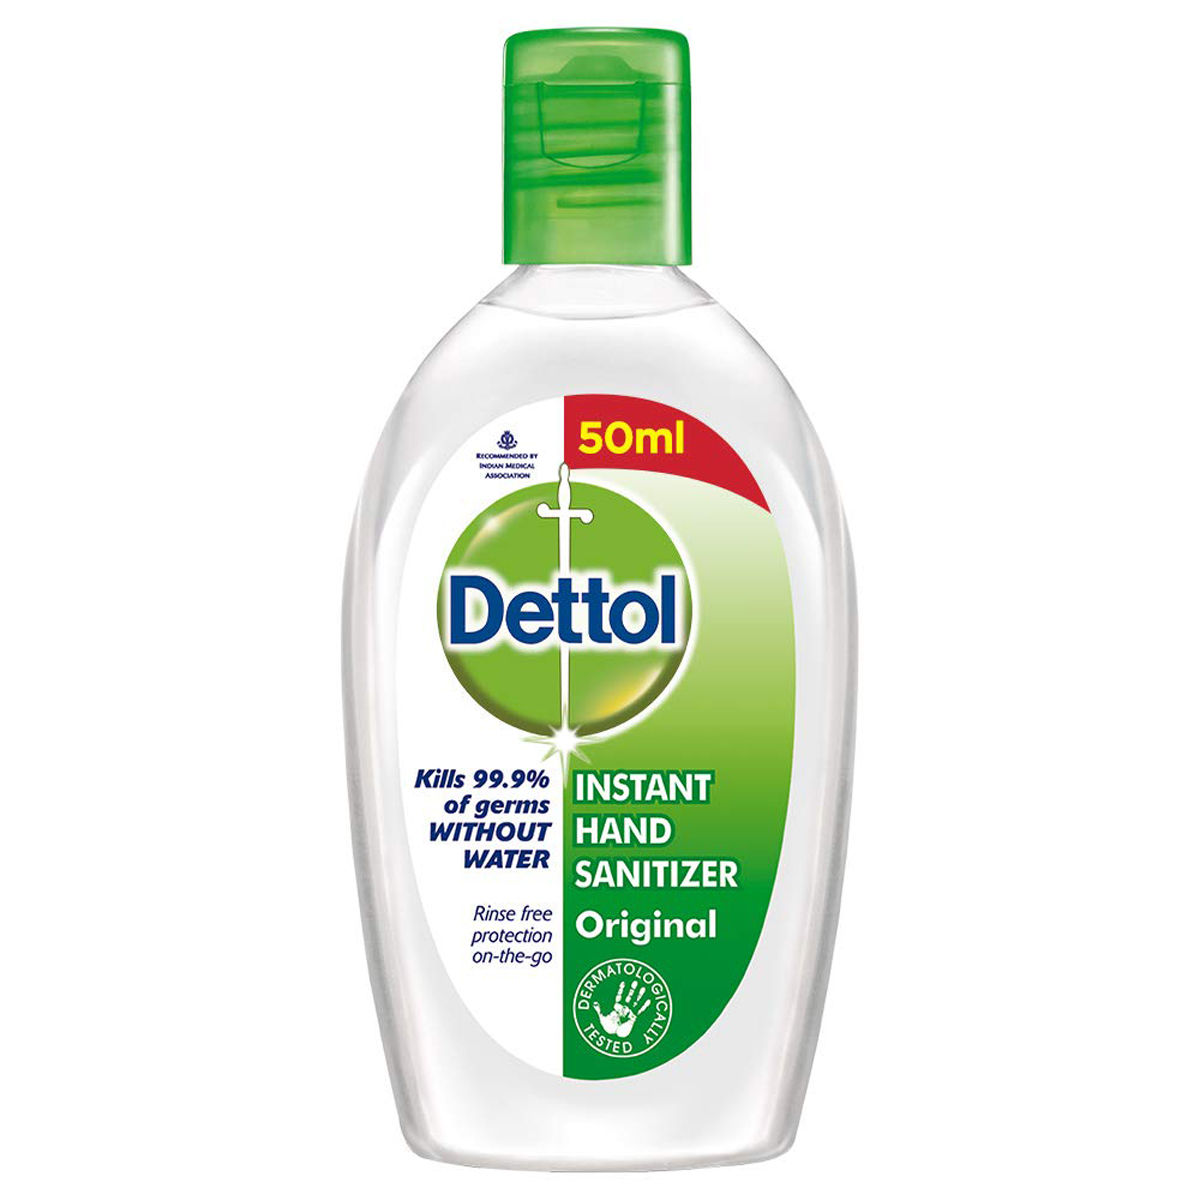 Buy Dettol Original Instant Hand Sanitizer, 50 ml Online